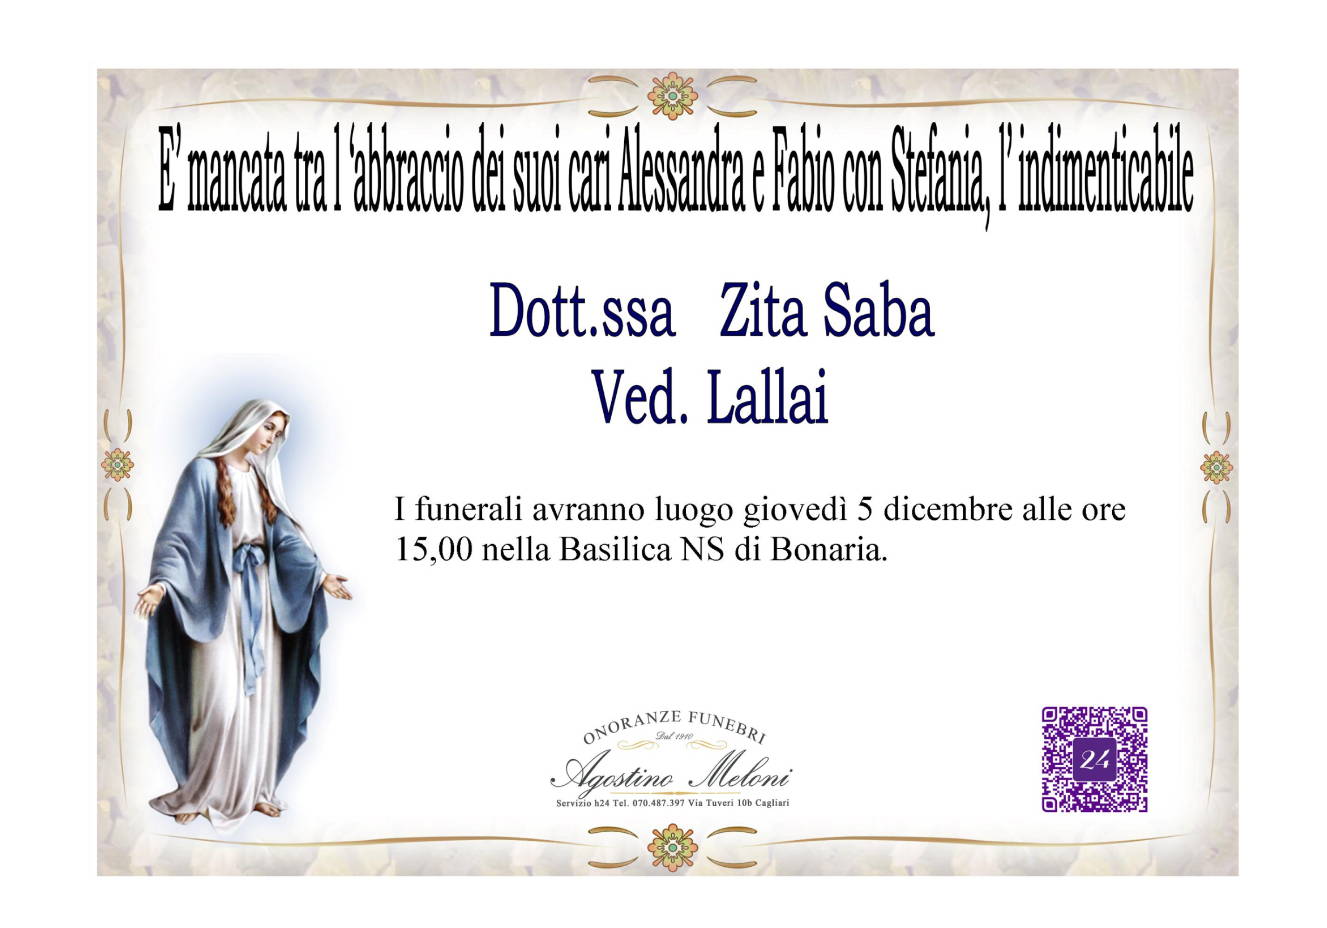 Zita Saba